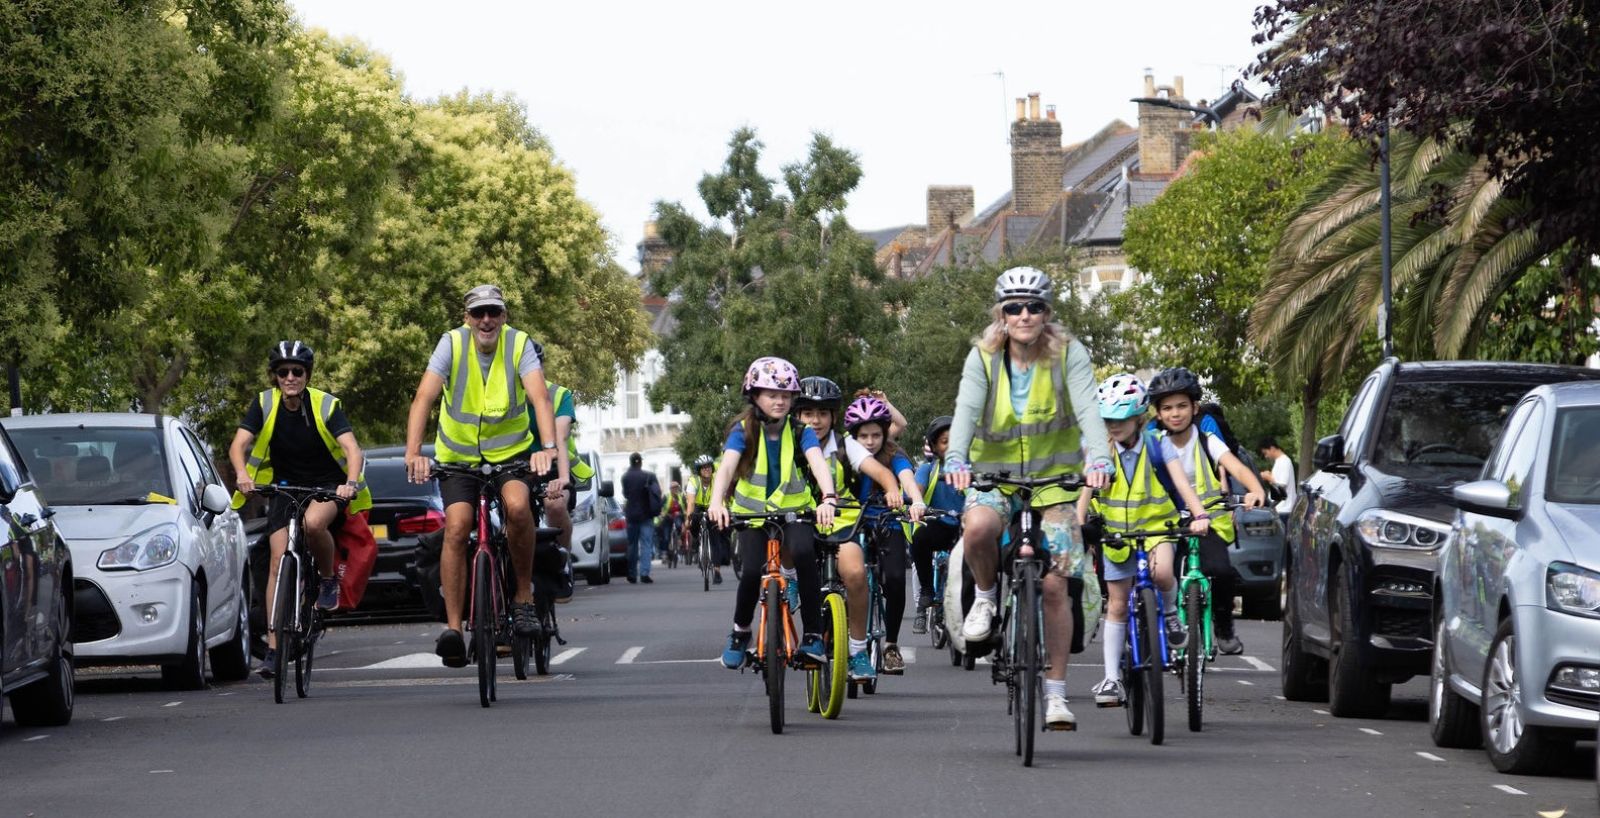 Lambeth schoolkids Bike the Borough